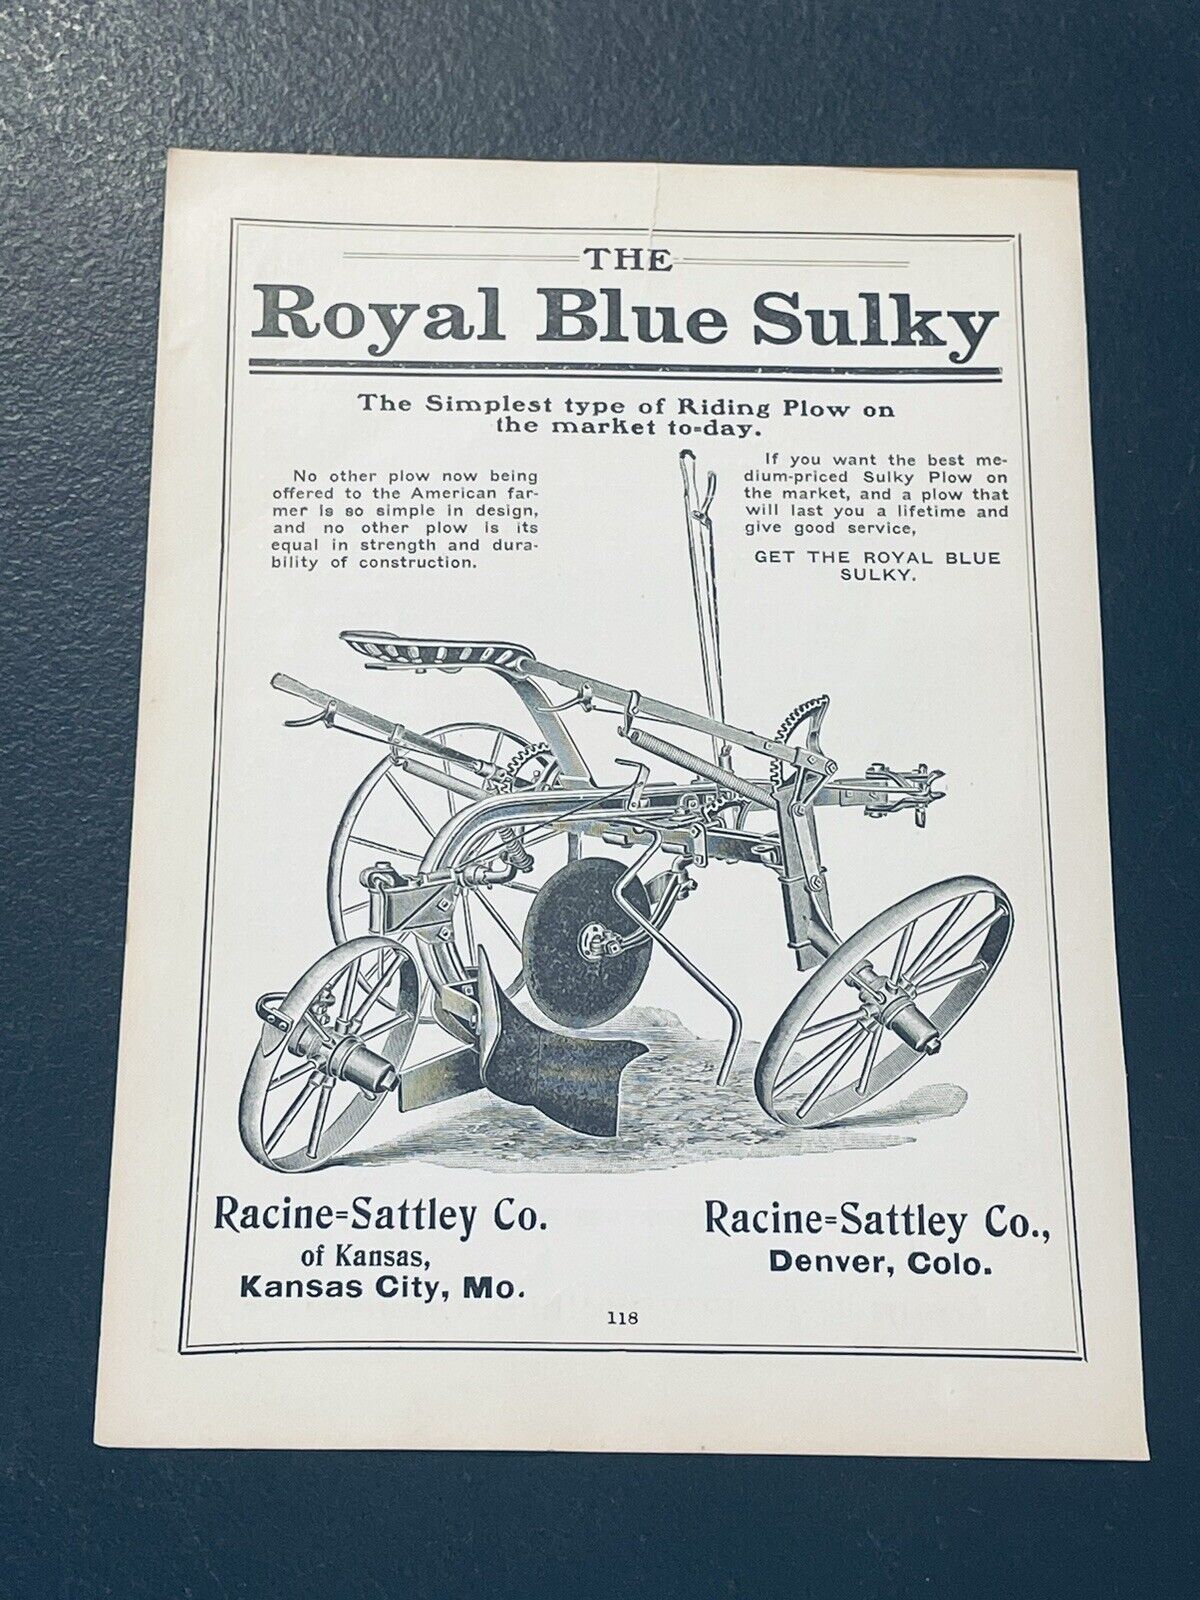 ORIGINAL 1907 Royal Blue Sulky Farm Implement Advertising - Racine-Sattley